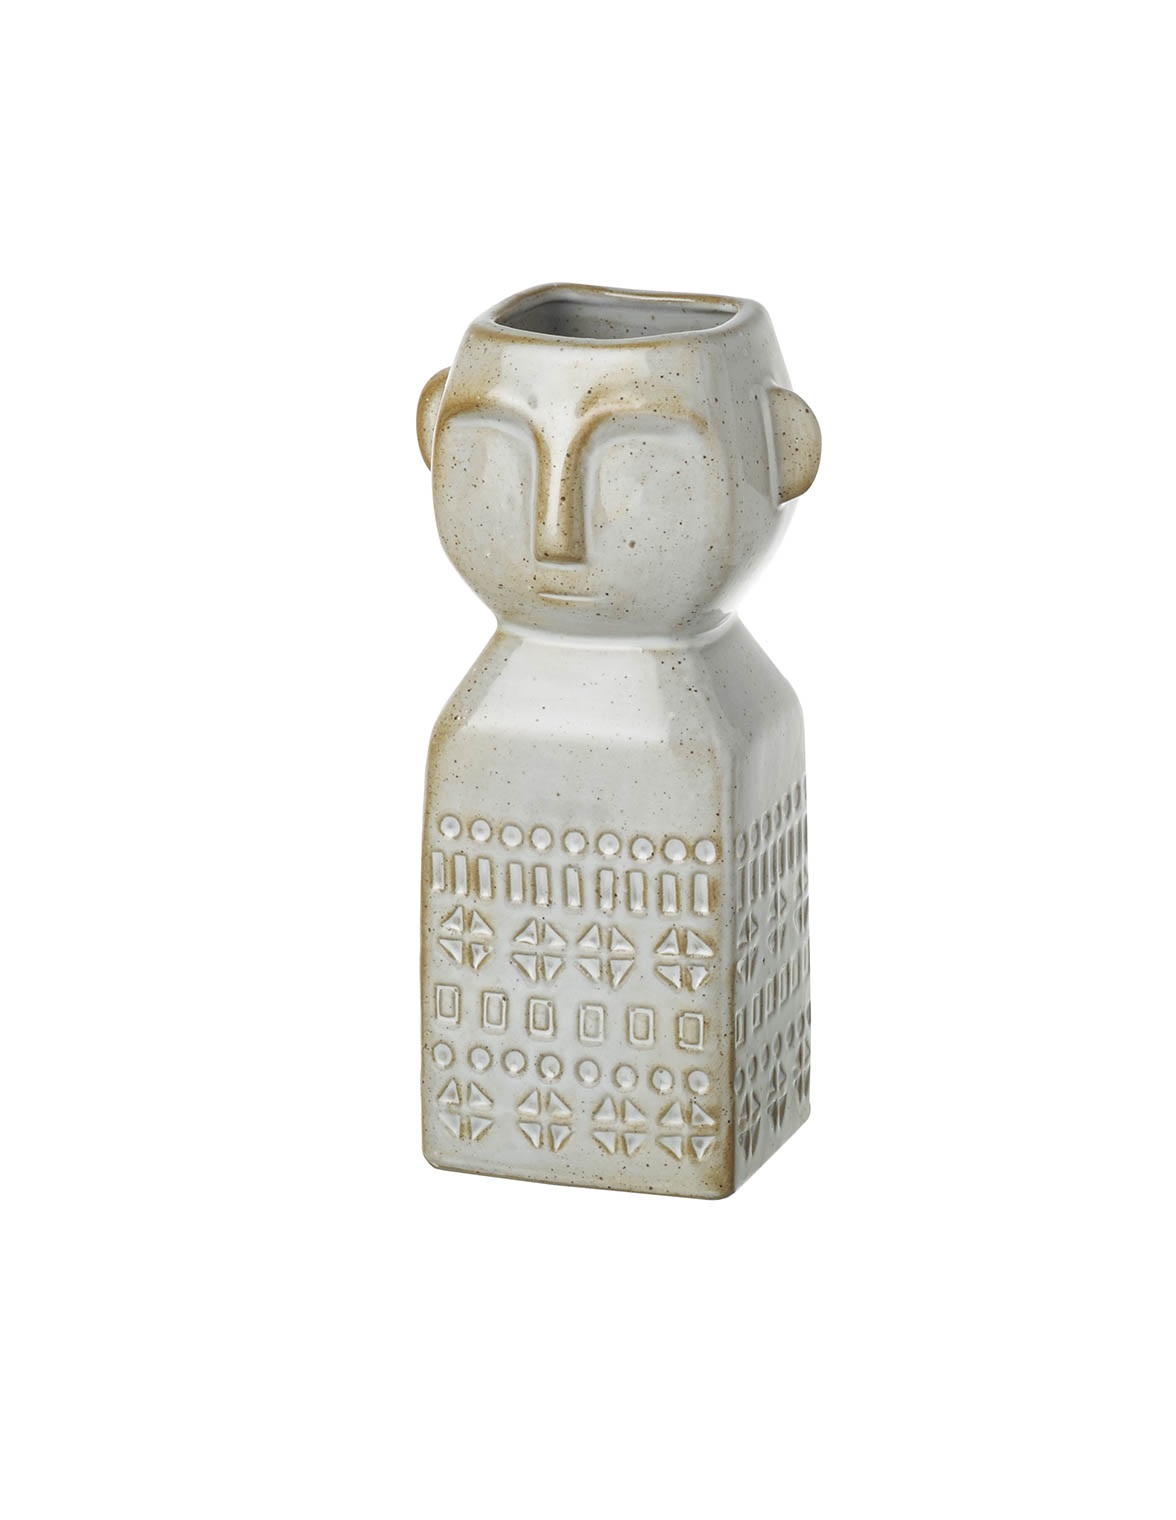 &Quirky Tribal Man Porcelain Vase